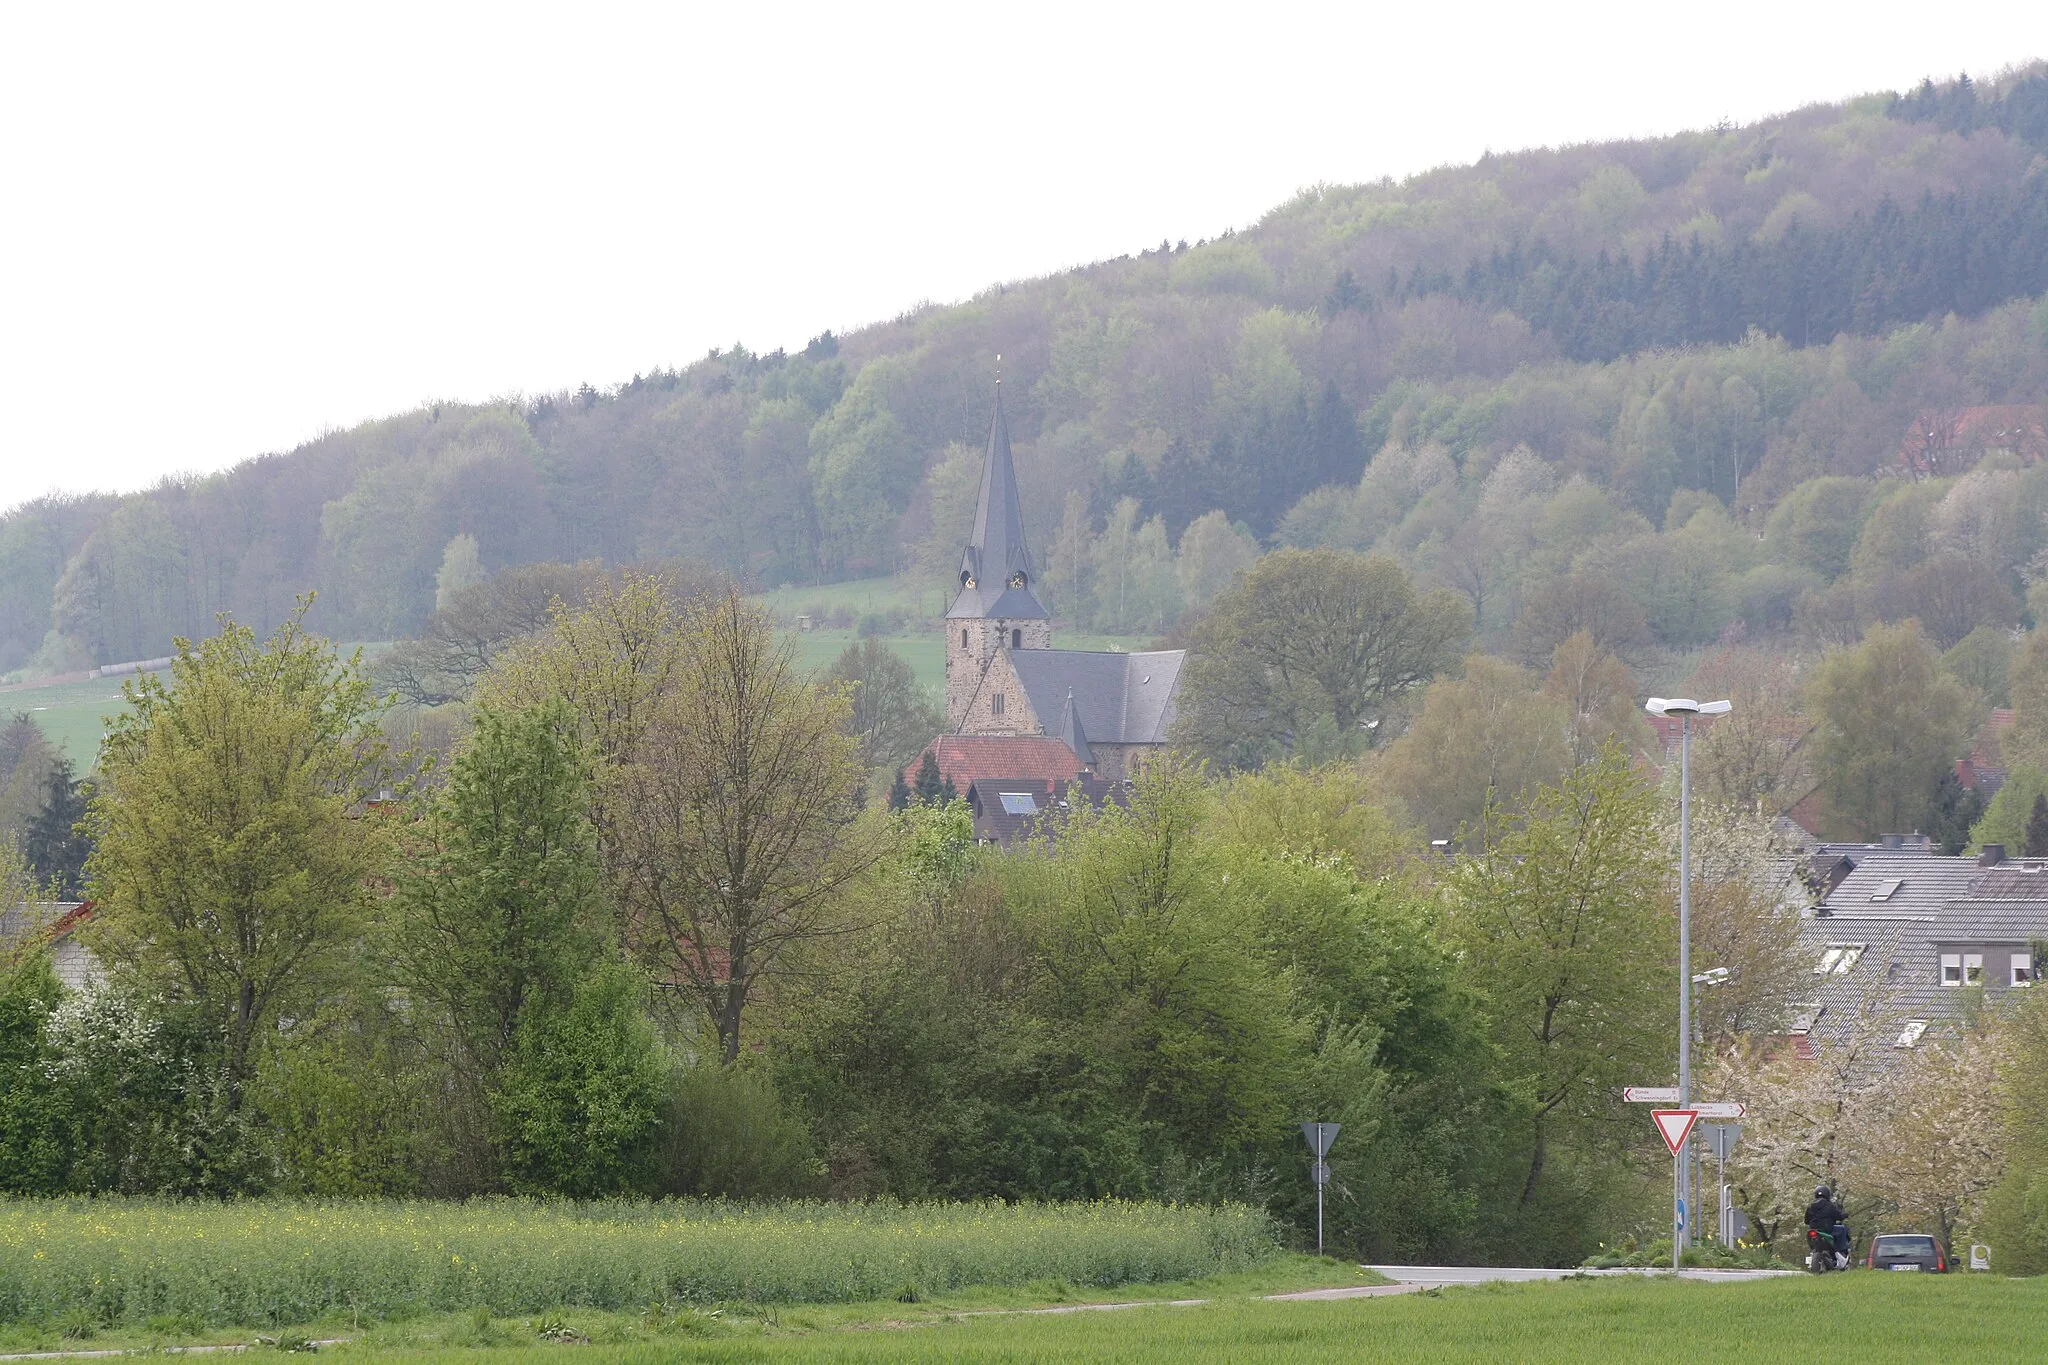 Photo showing: Saint Bartholomew lutheran church in Rödinghausen, District of Herford, North Rhine-Westphalia, Germany.